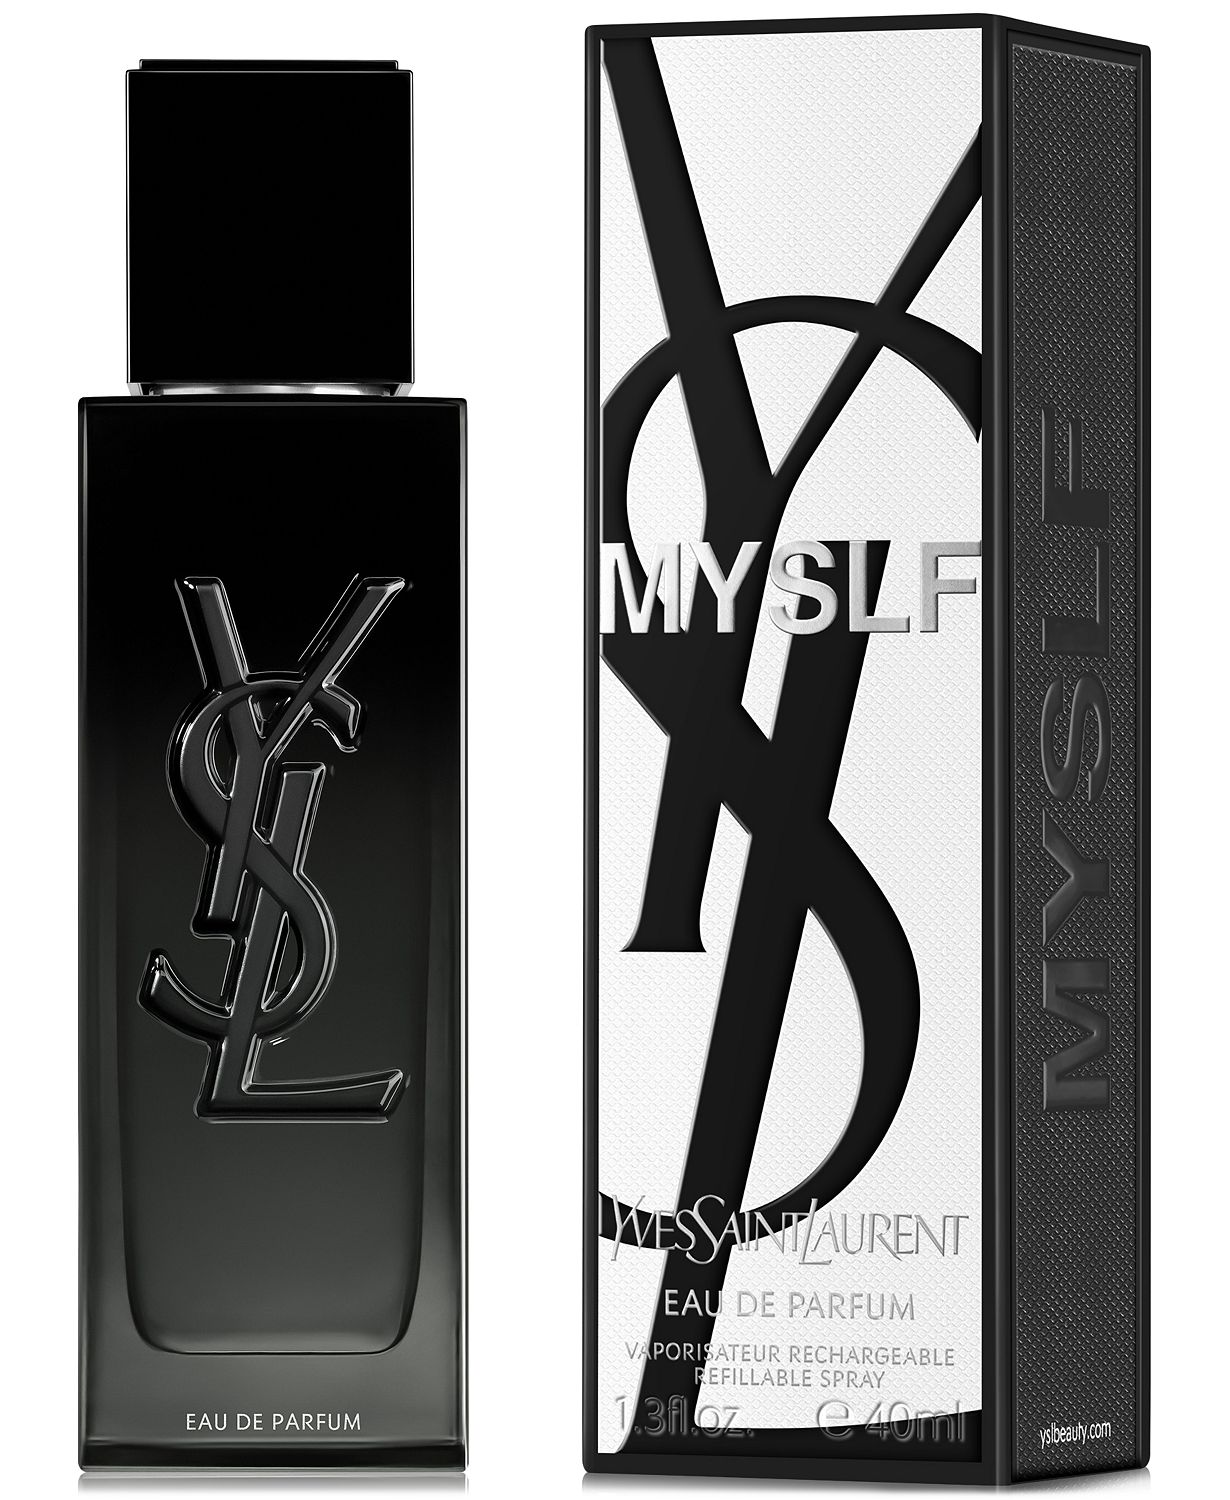 MYSLF Eau de Parfum Spray, 1.3 oz.